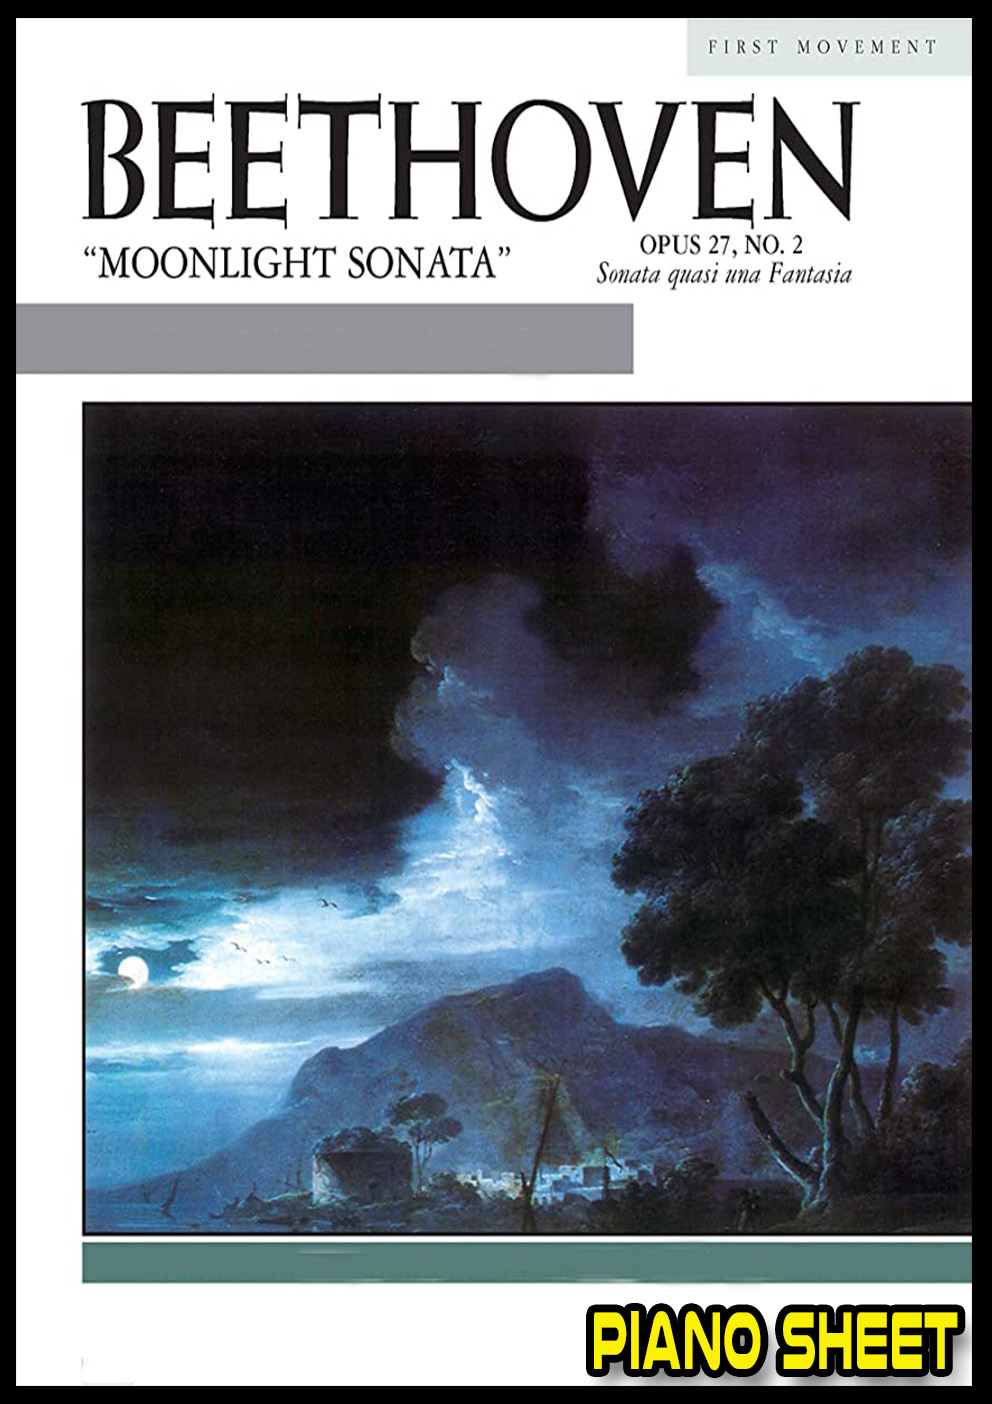 Beethoven, Moonlight Sonata 1st Movement Sheet Music Cover